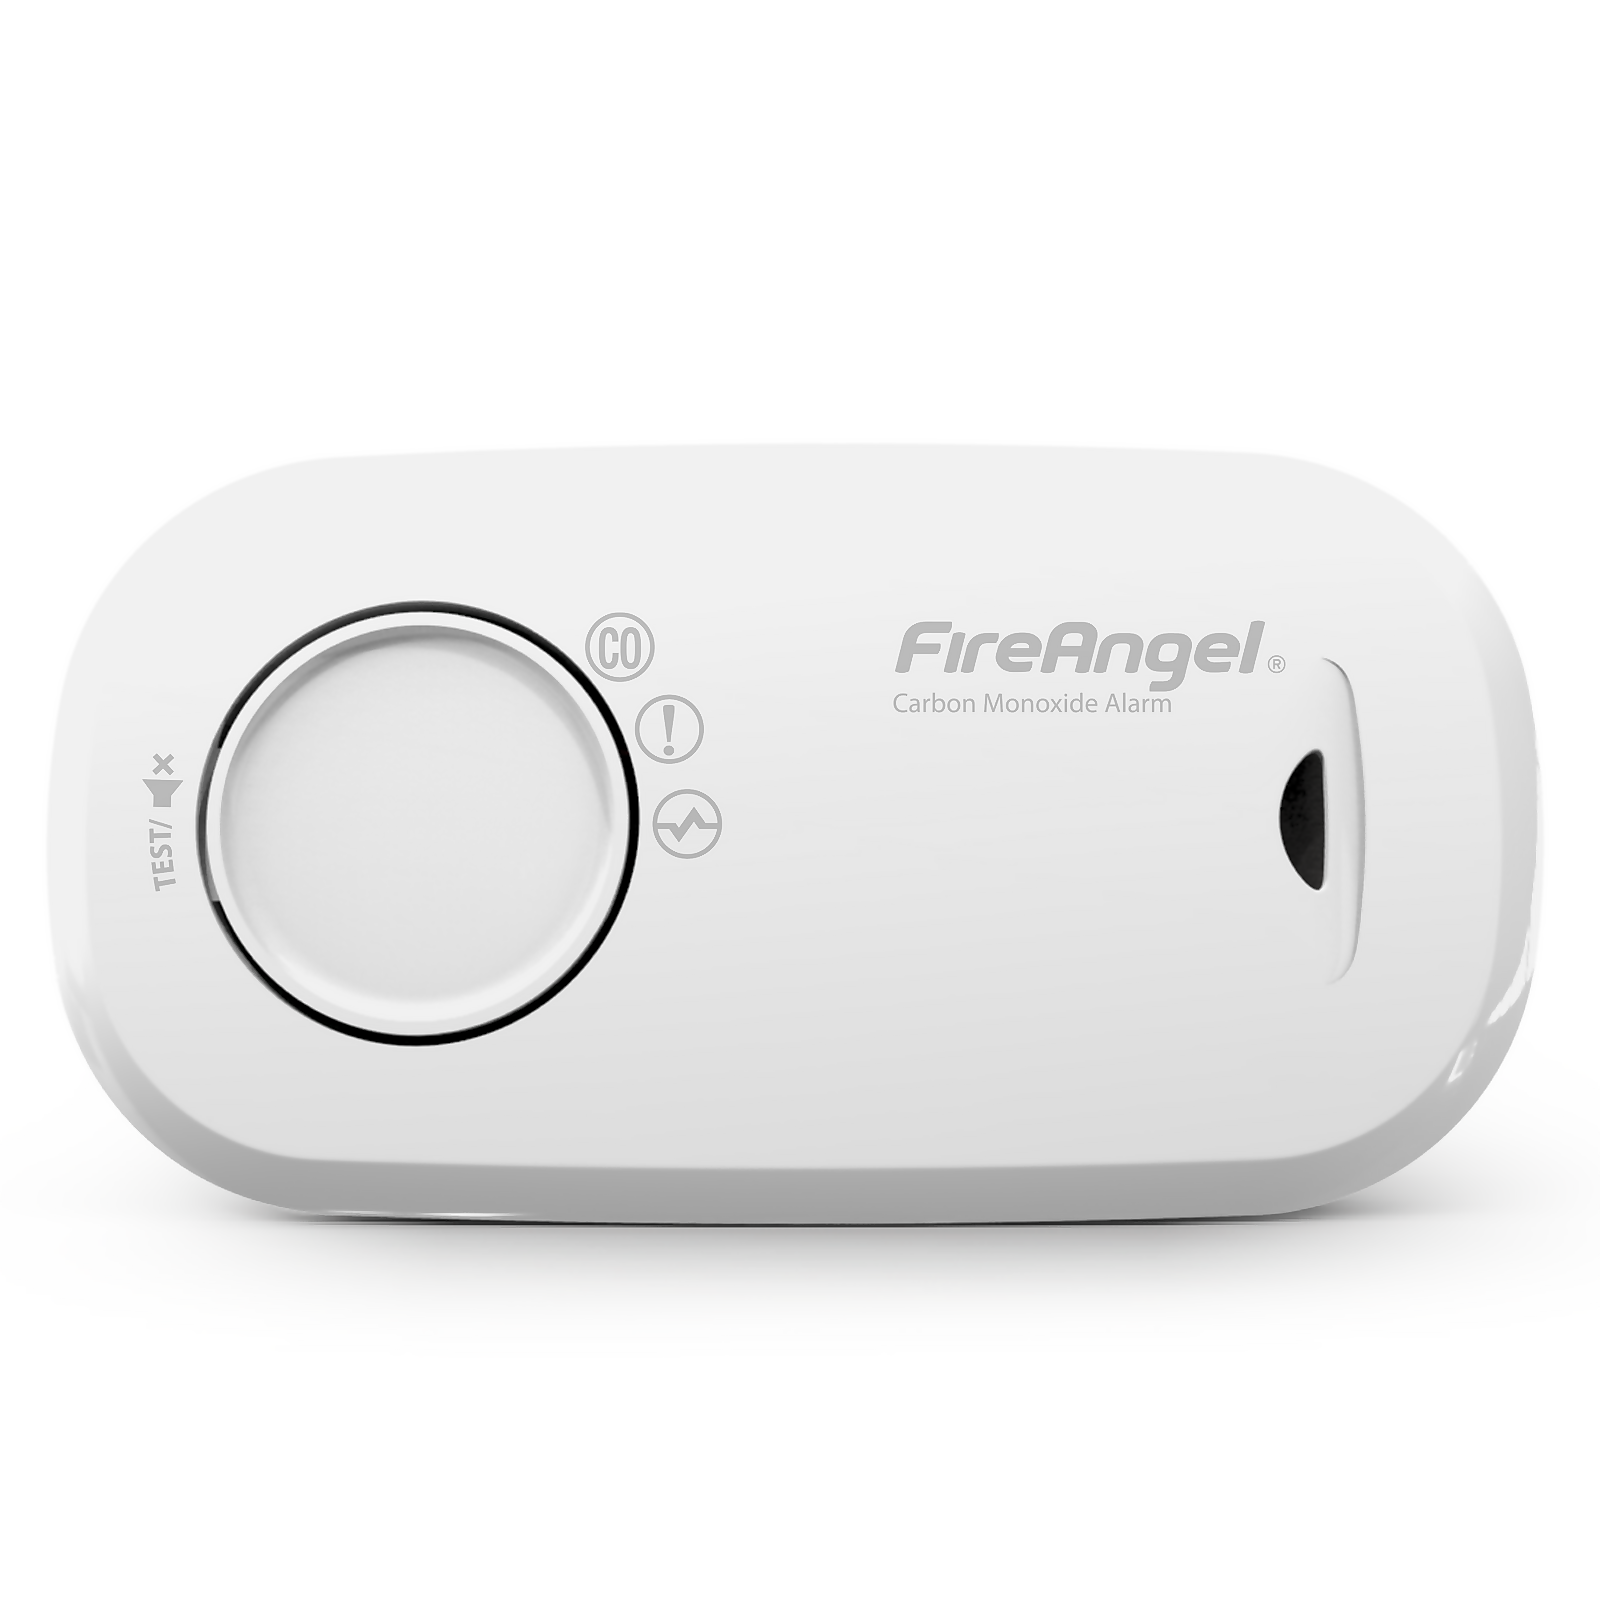 FireAngel Carbon Monoxide Alarm with 1 Year Replaceable Batteries